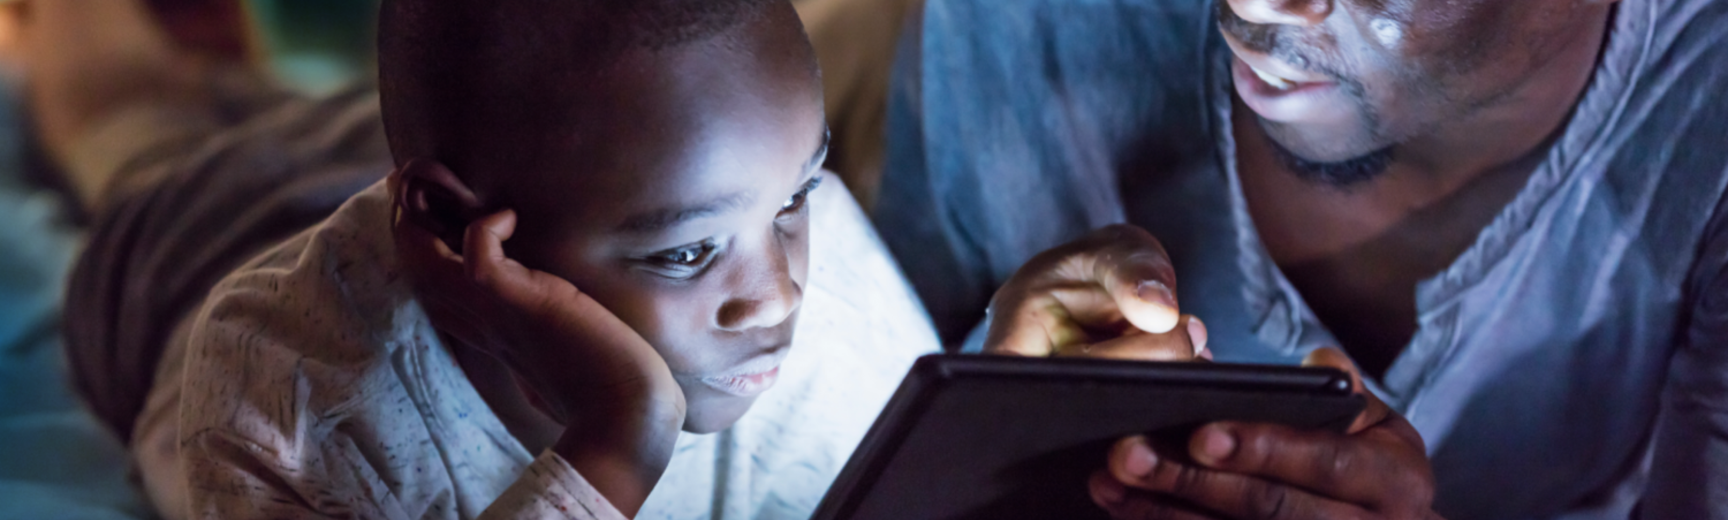 parenting for respectability pfr digital in uganda